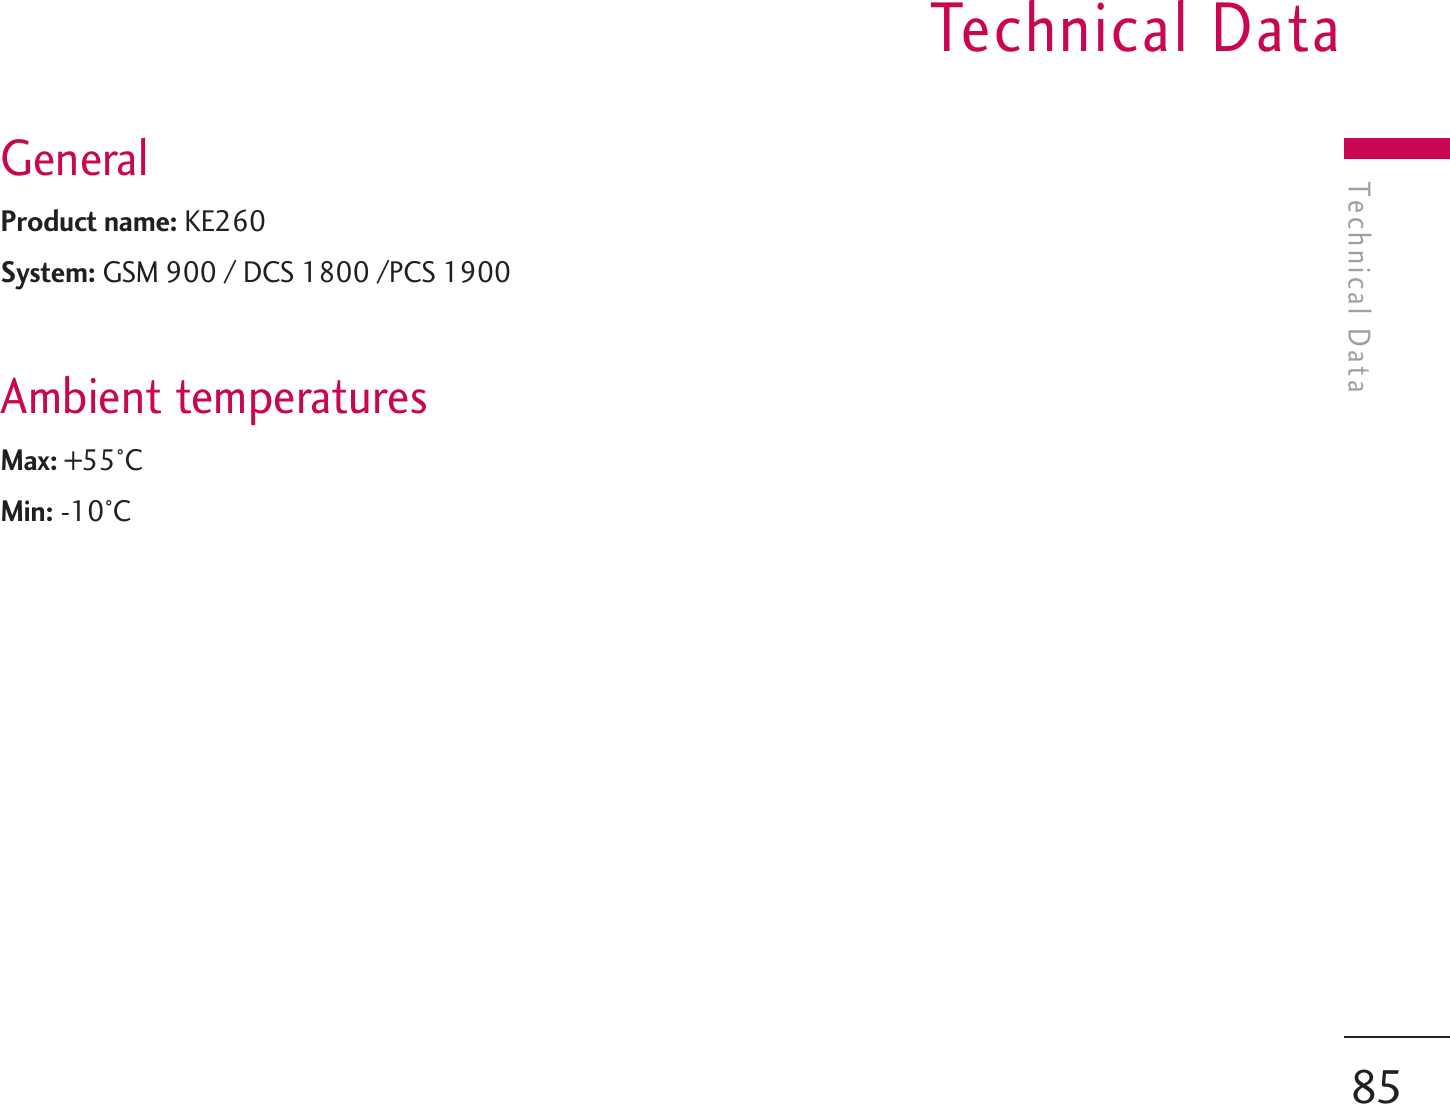 Technical DataTechnical Data85GeneralProduct name: KE260System: GSM 900 / DCS 1800 /PCS 1900Ambient temperaturesMax: +55˚CMin: -10˚C